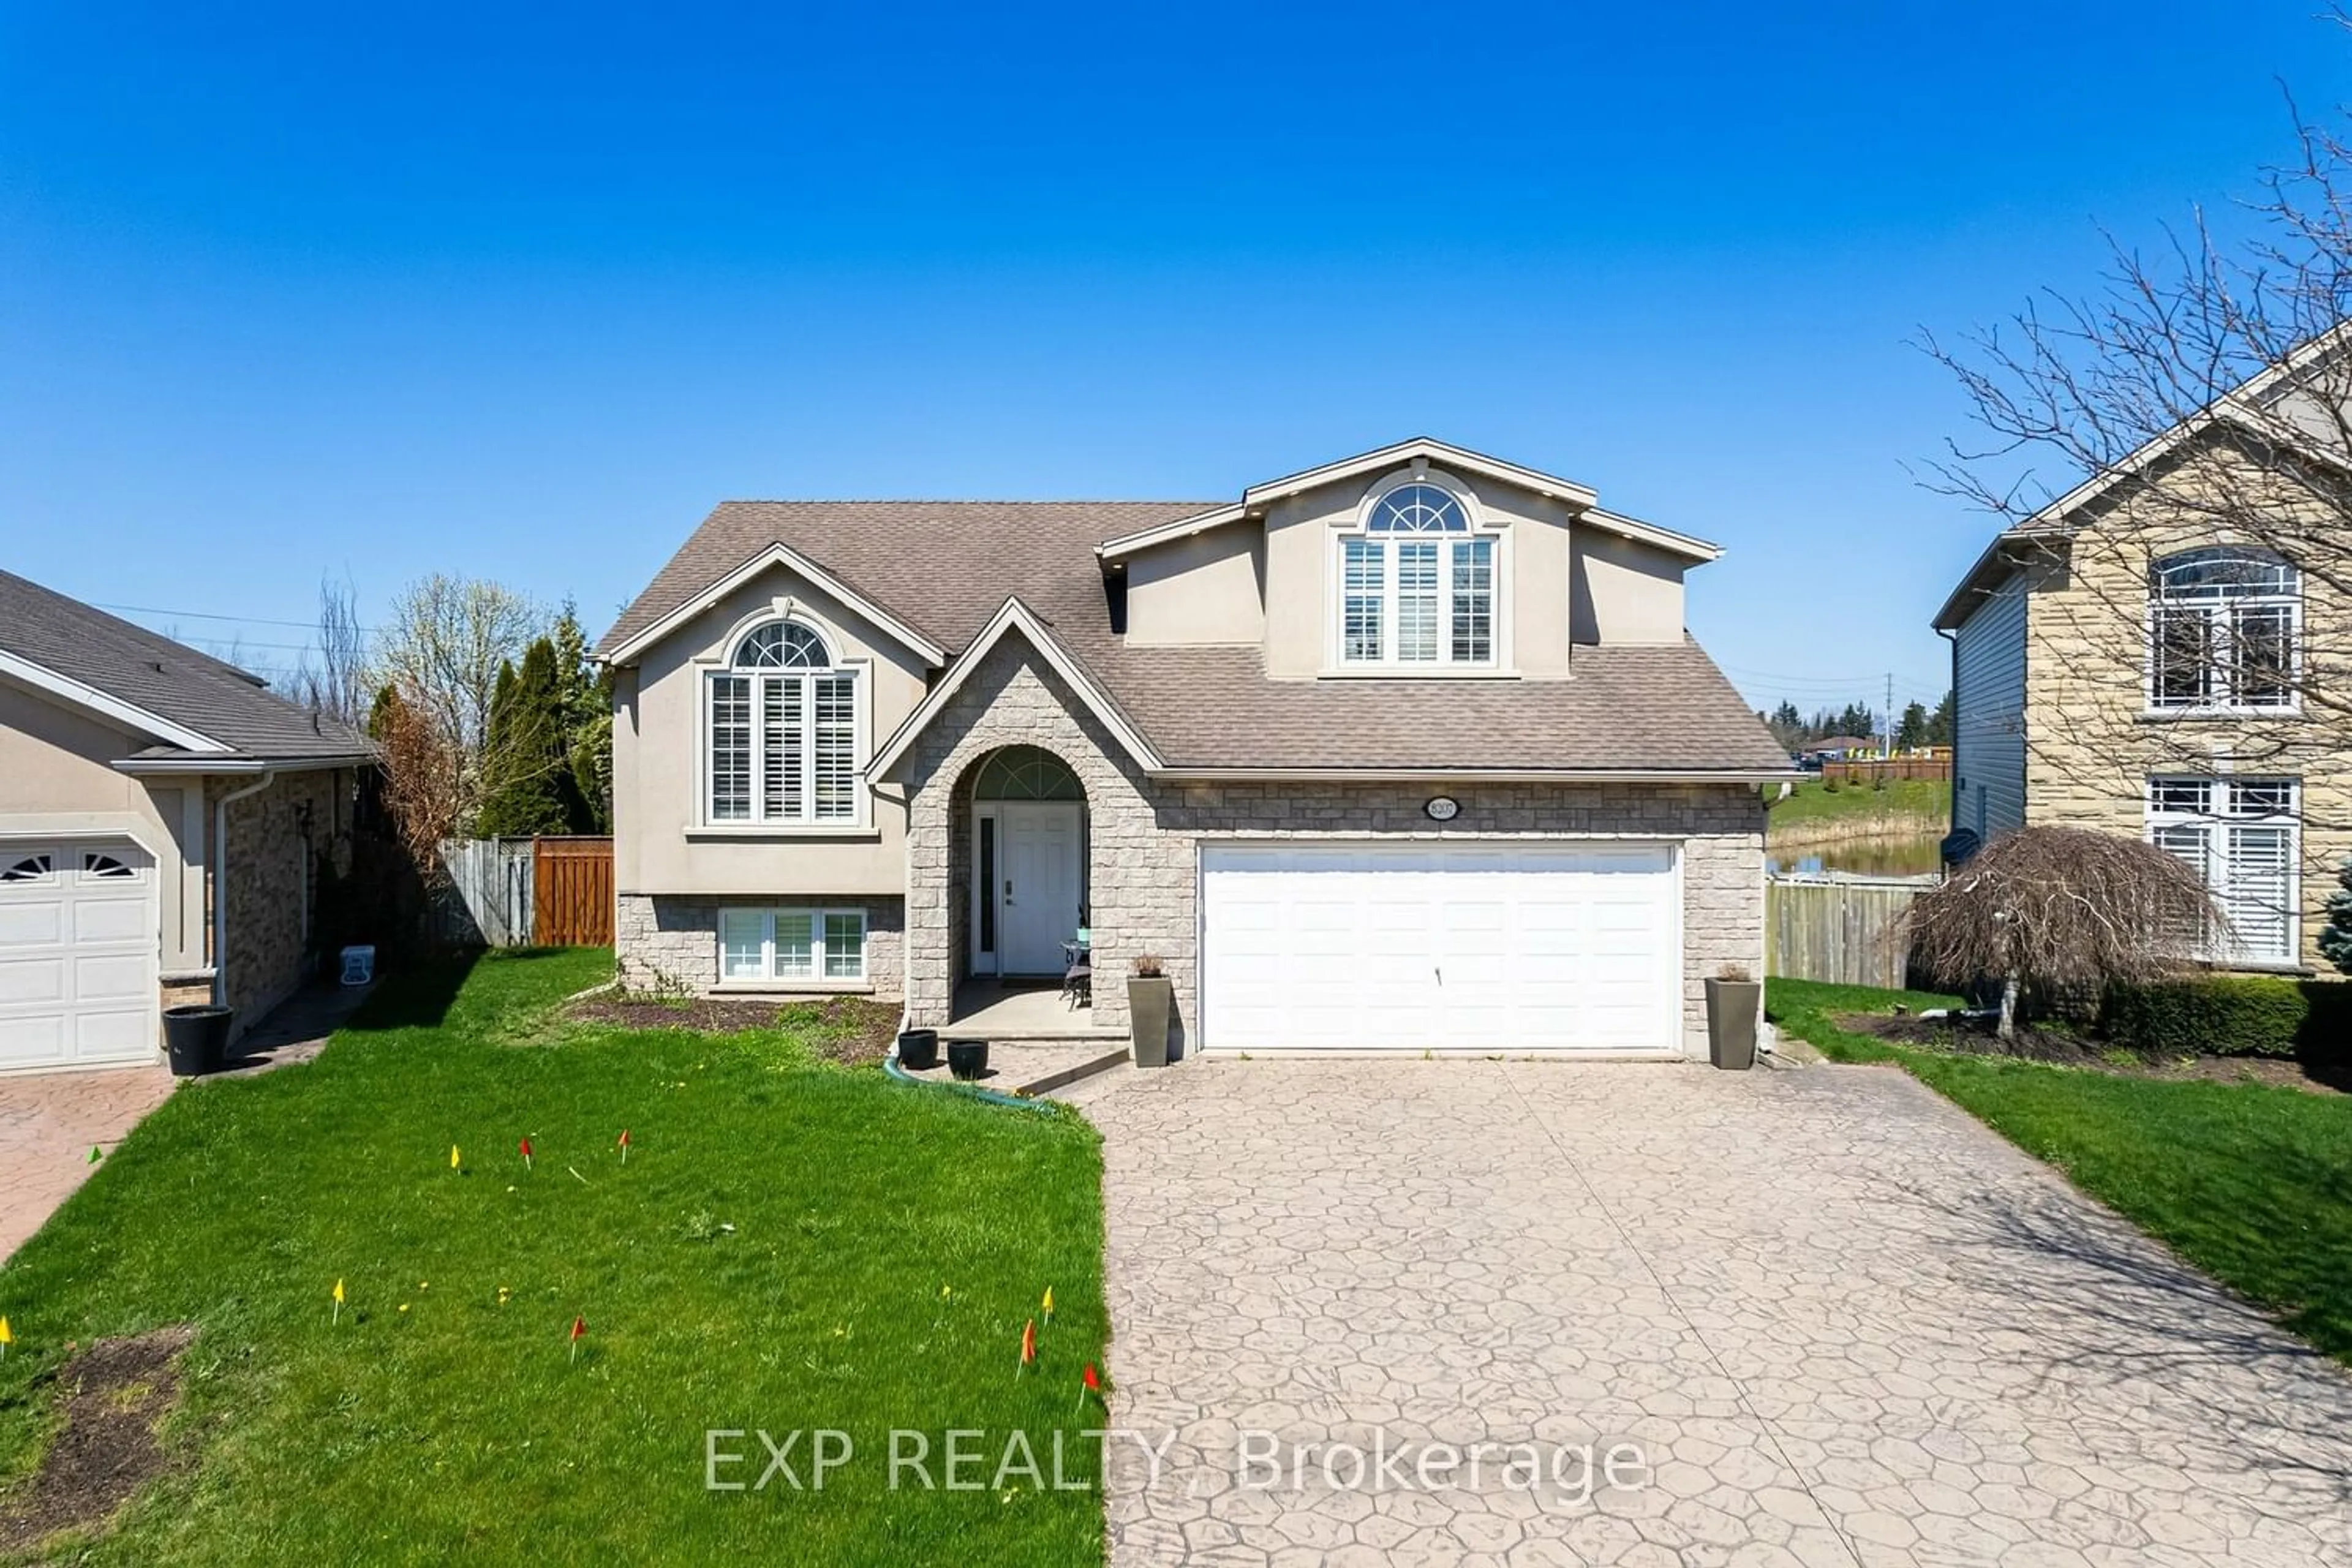 Frontside or backside of a home for 8207 Beaver Glen Dr, Niagara Falls Ontario L2H 3K5